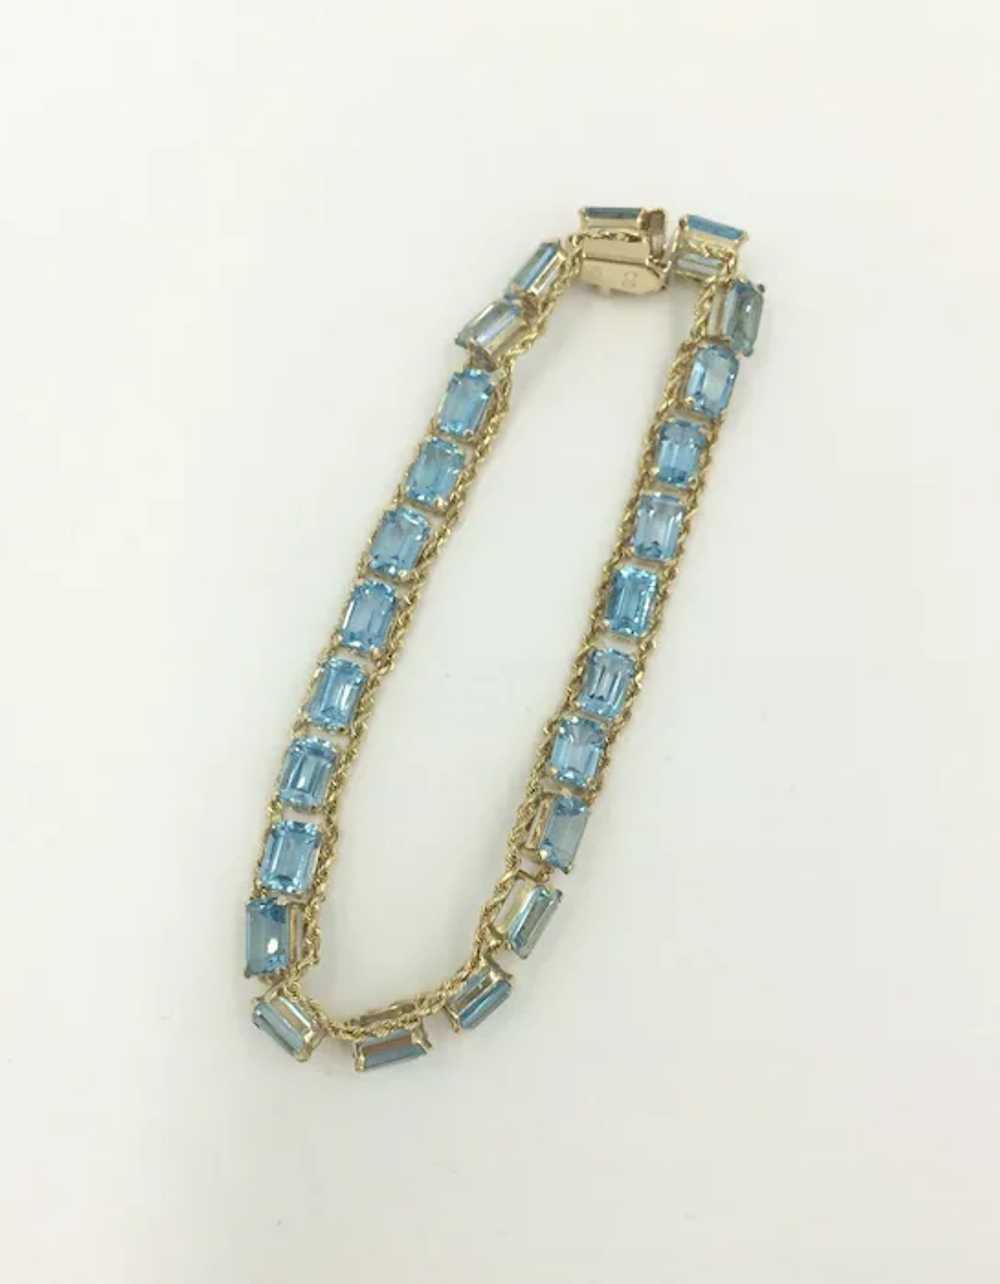 10K Gold Blue Topaz Gemstone Rope Chain Bracelet - image 3